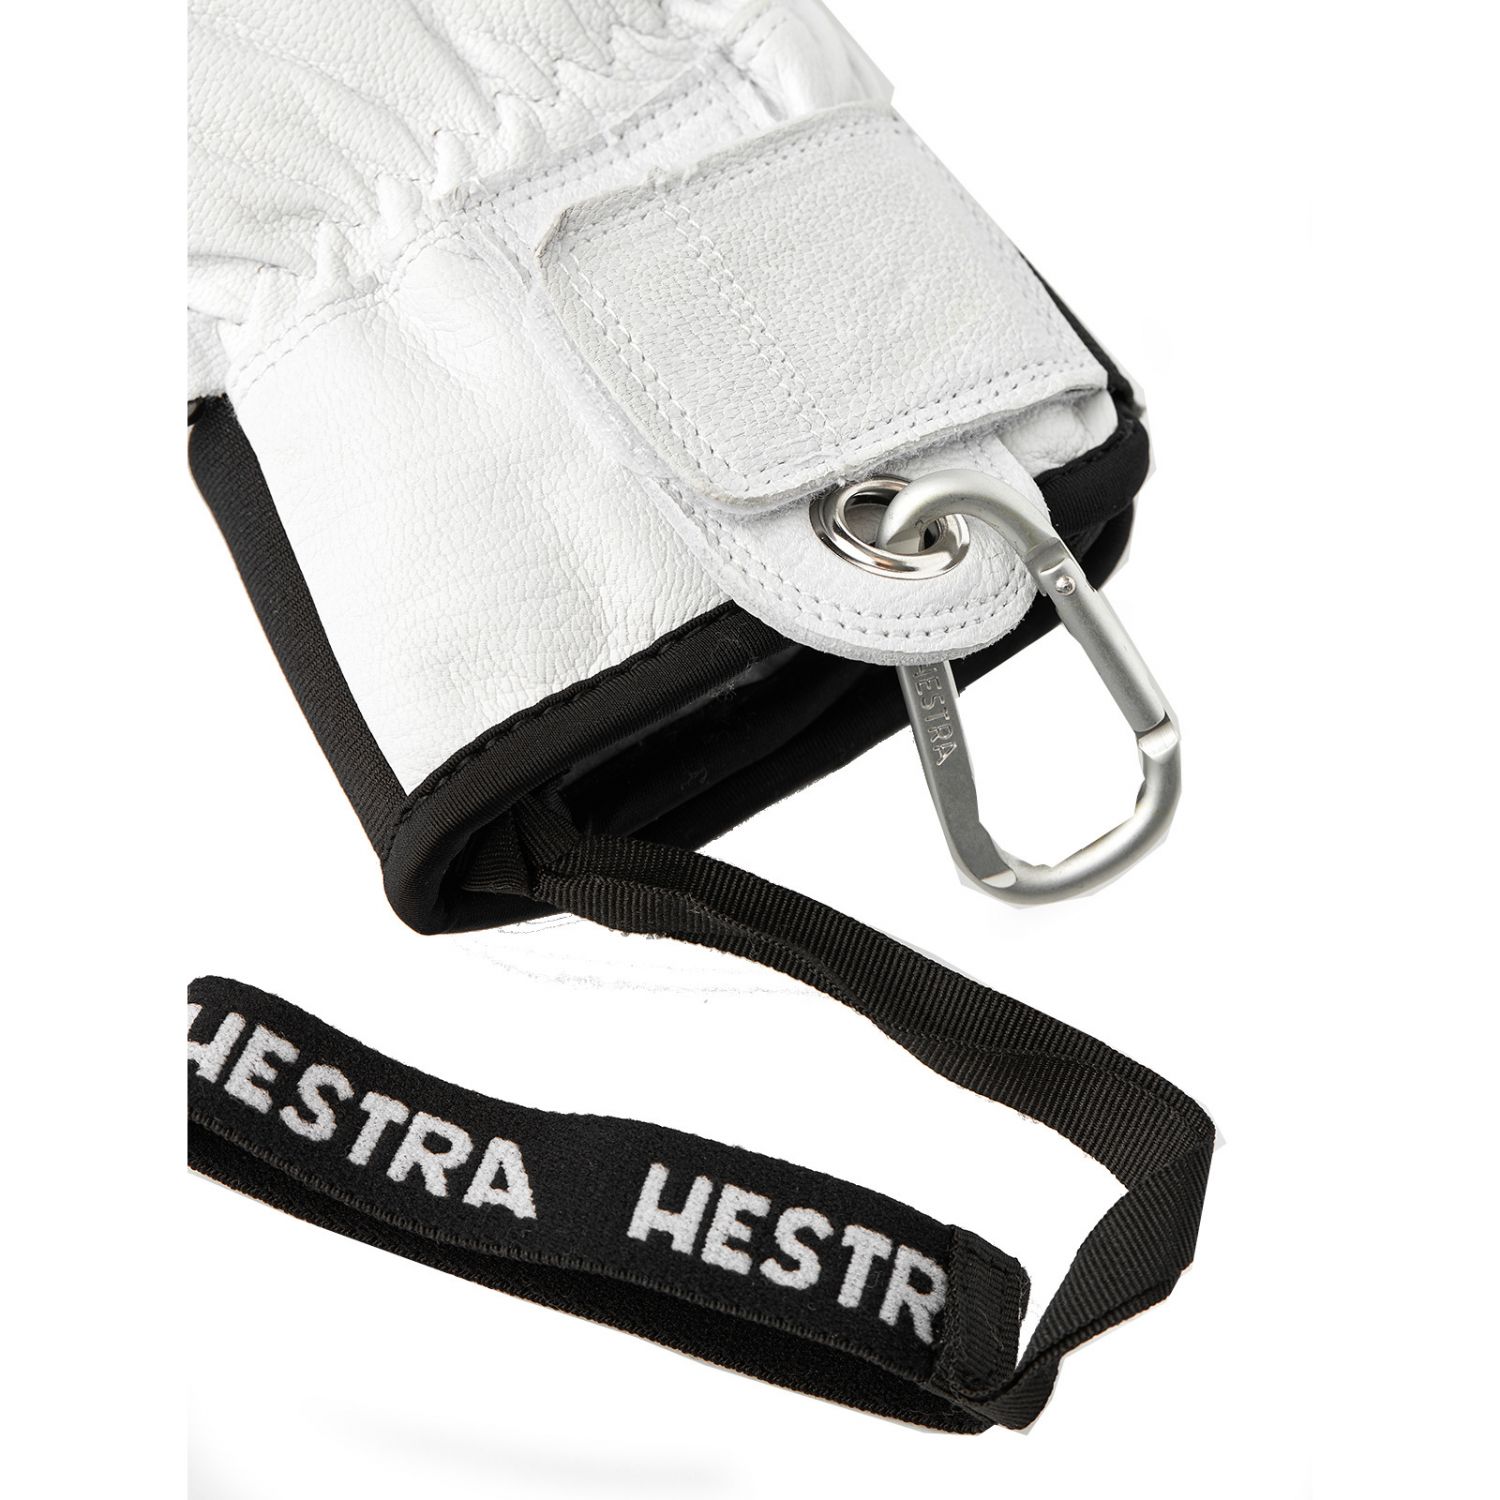 Hestra Army Leather Patrol 3-finger Skidhandskar, Svart